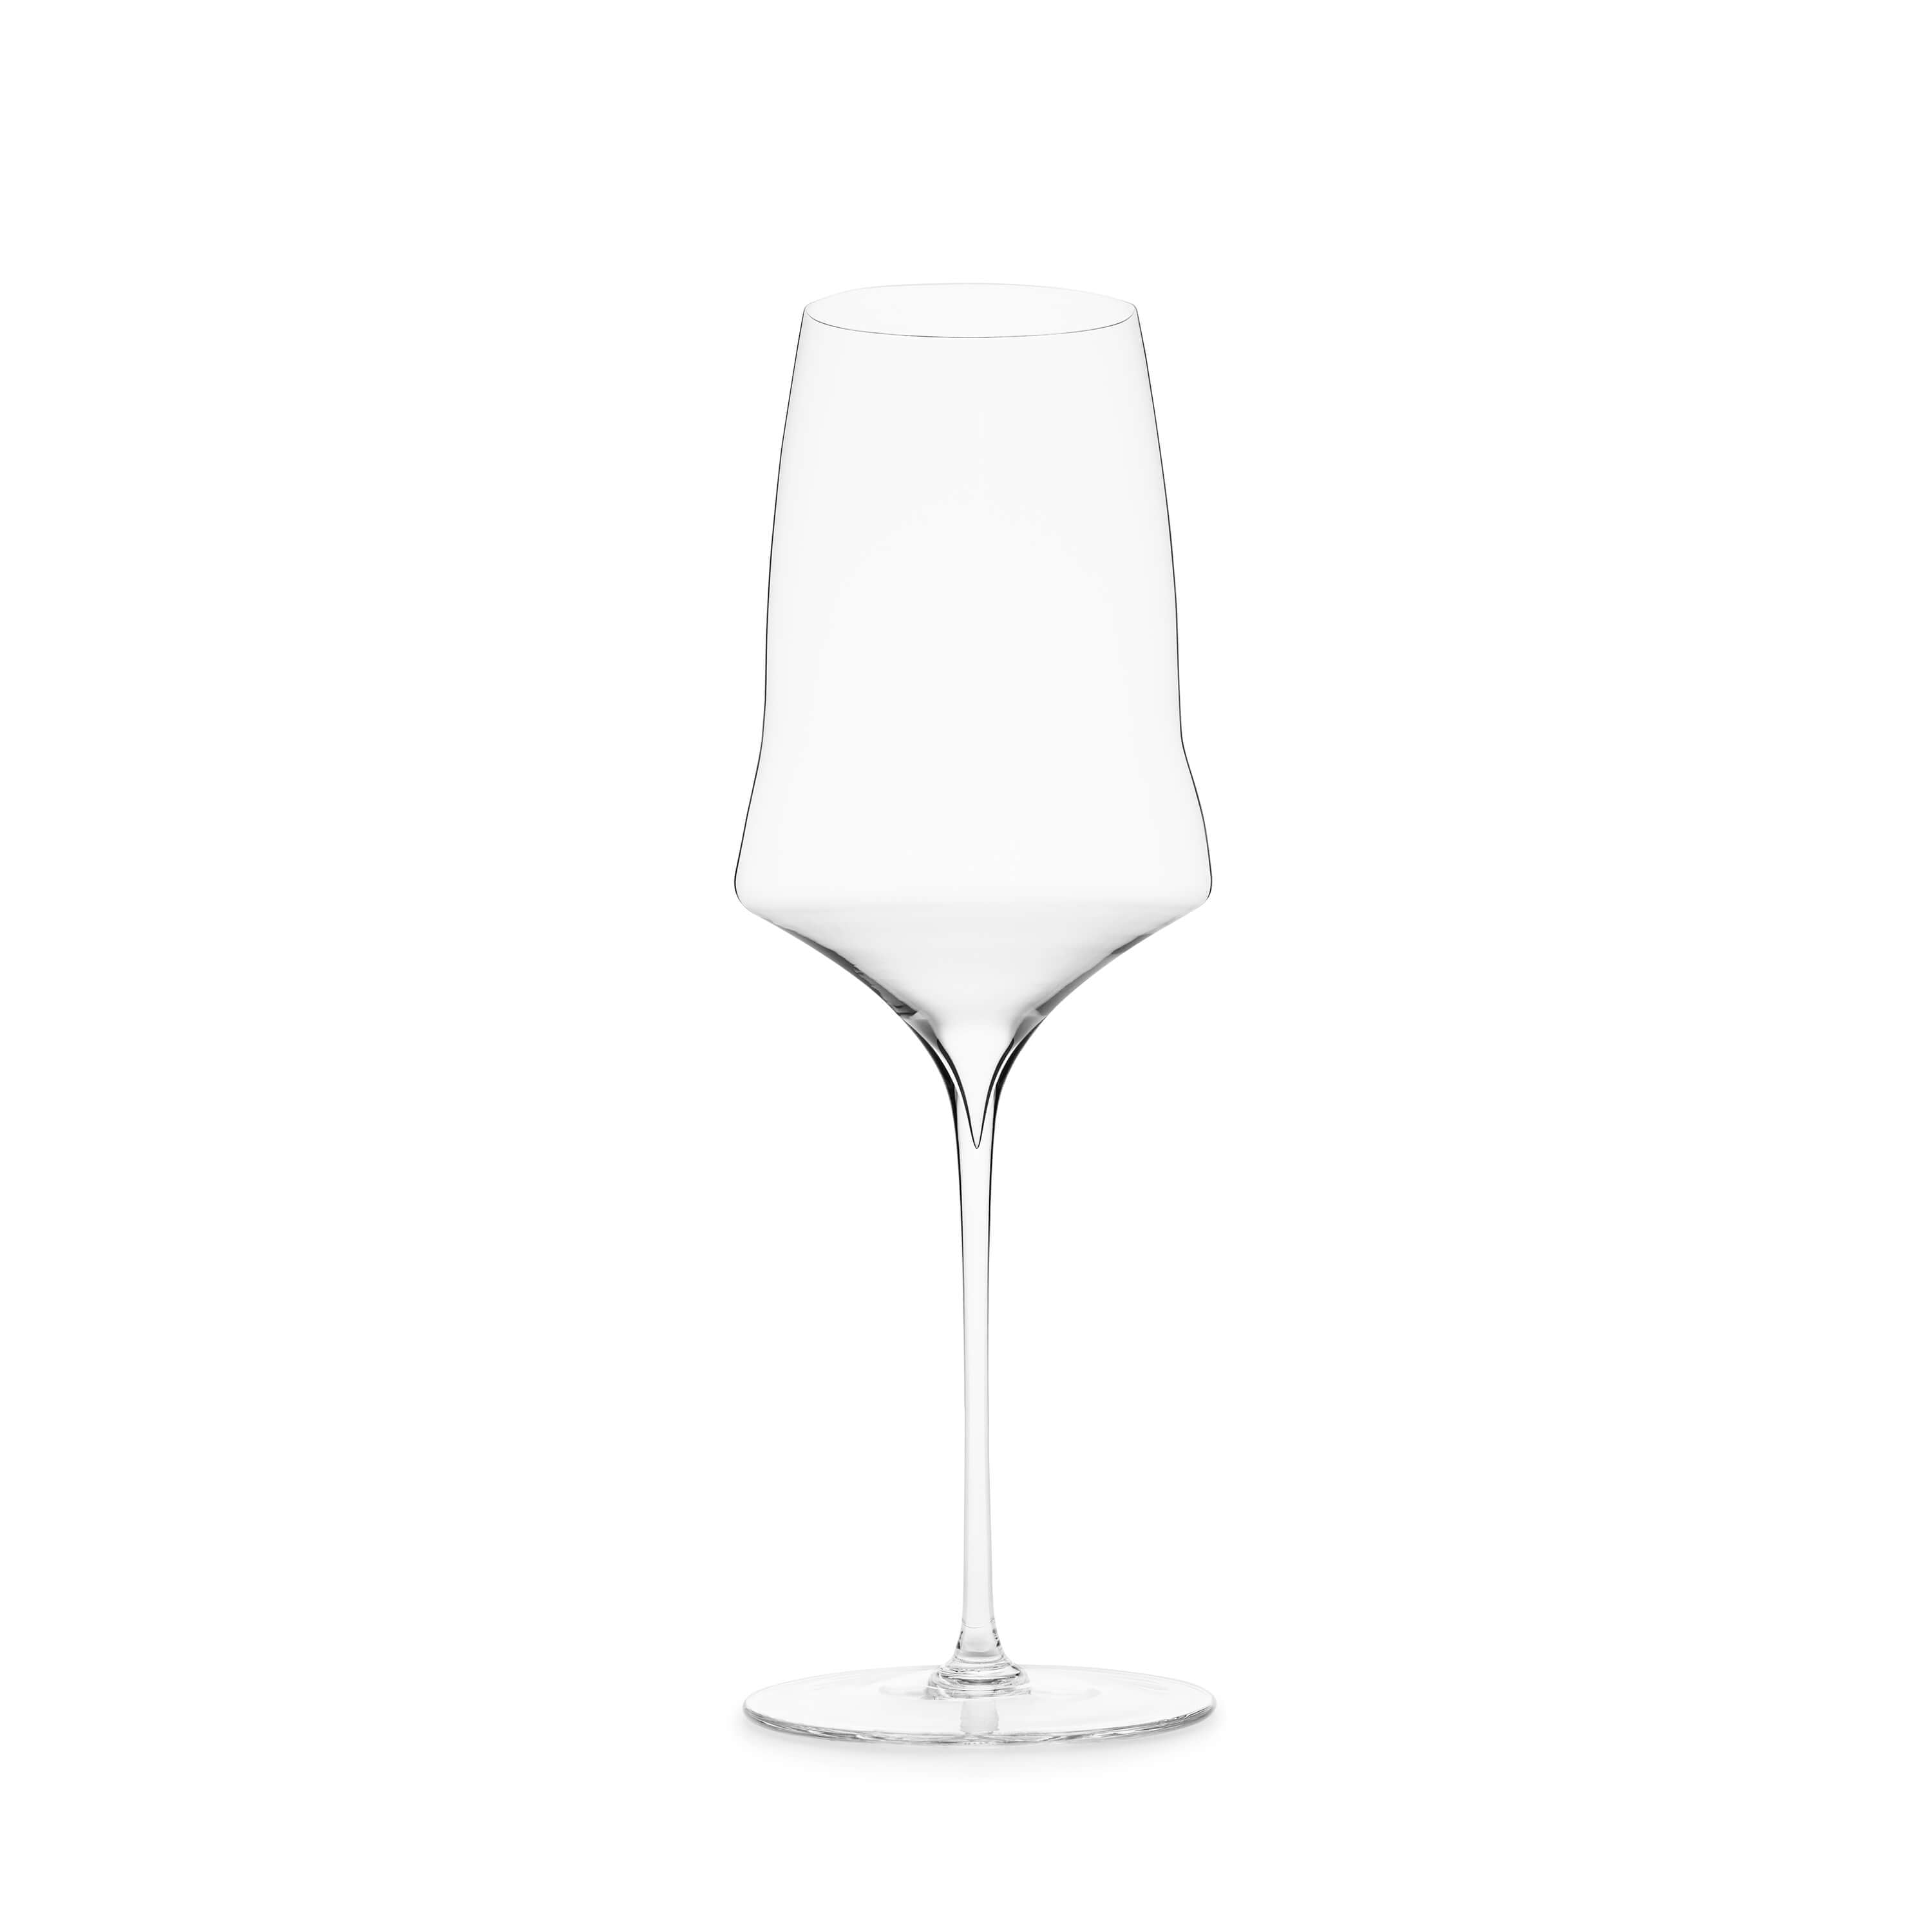 Josephine No 1 – White wine glass – Single Glass